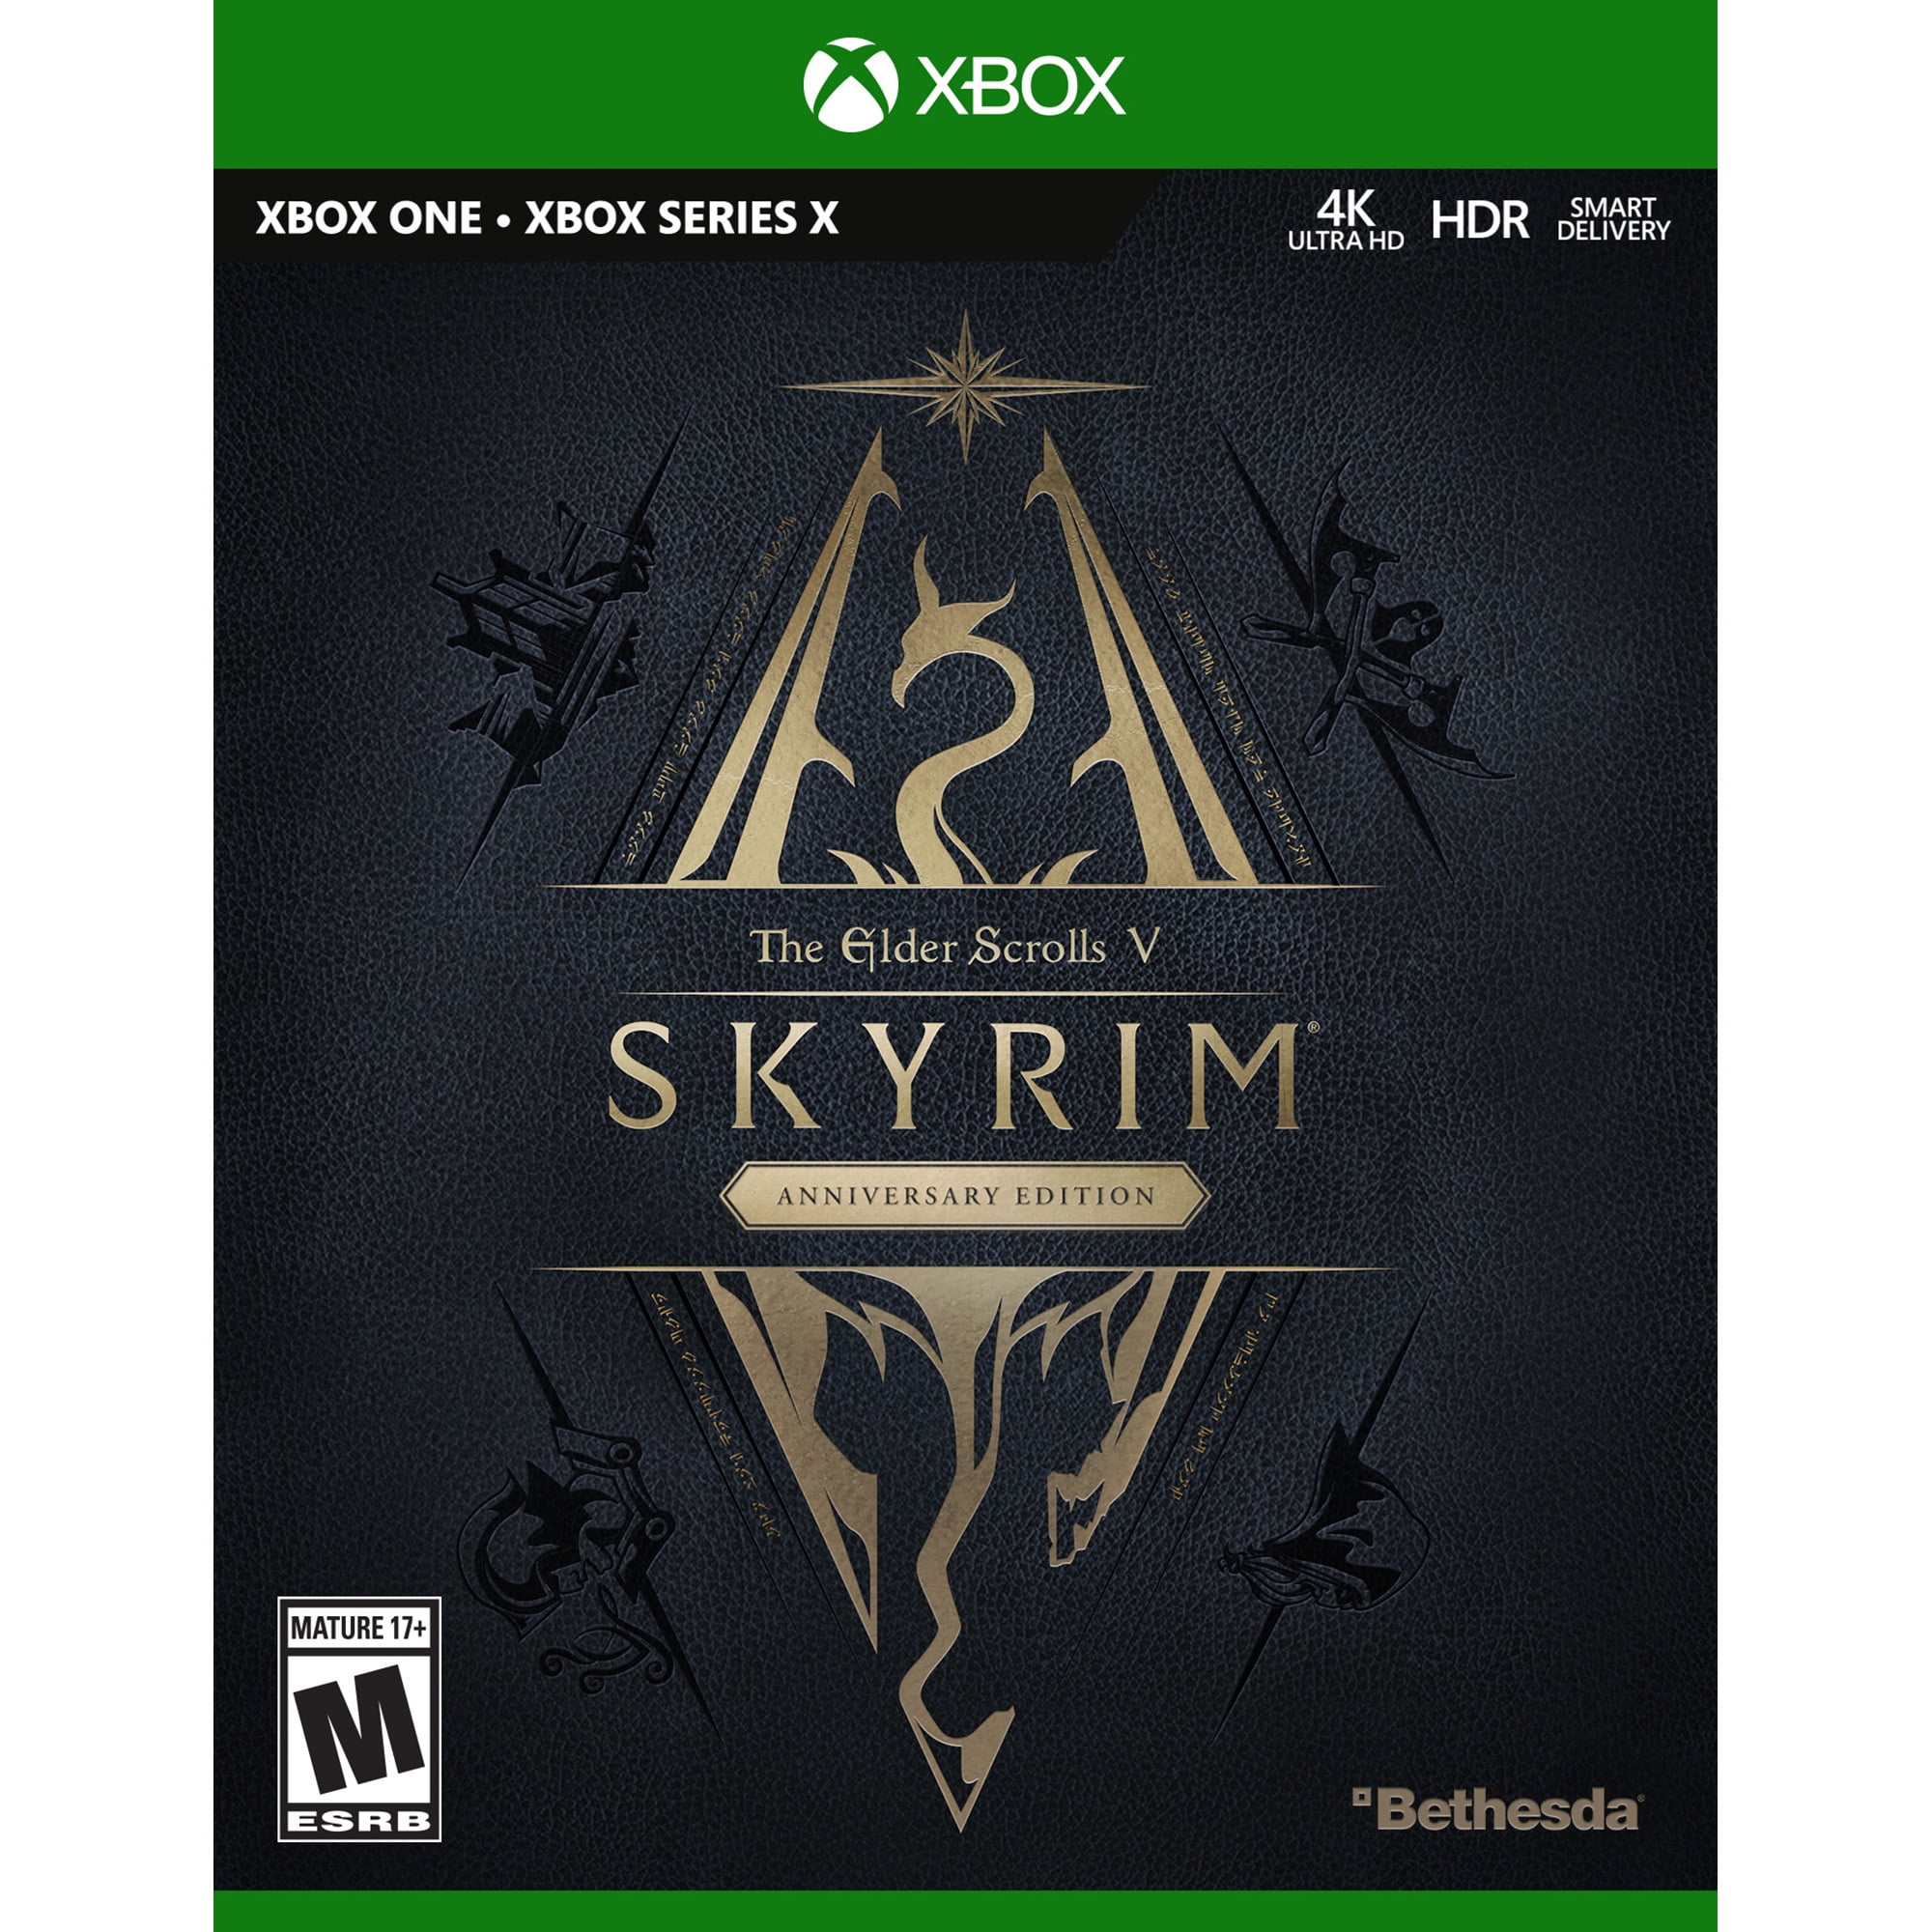 The Elder Scrolls V: Skyrim Anniversary Edition, Xbox One, Xbox Series X, 093155175815